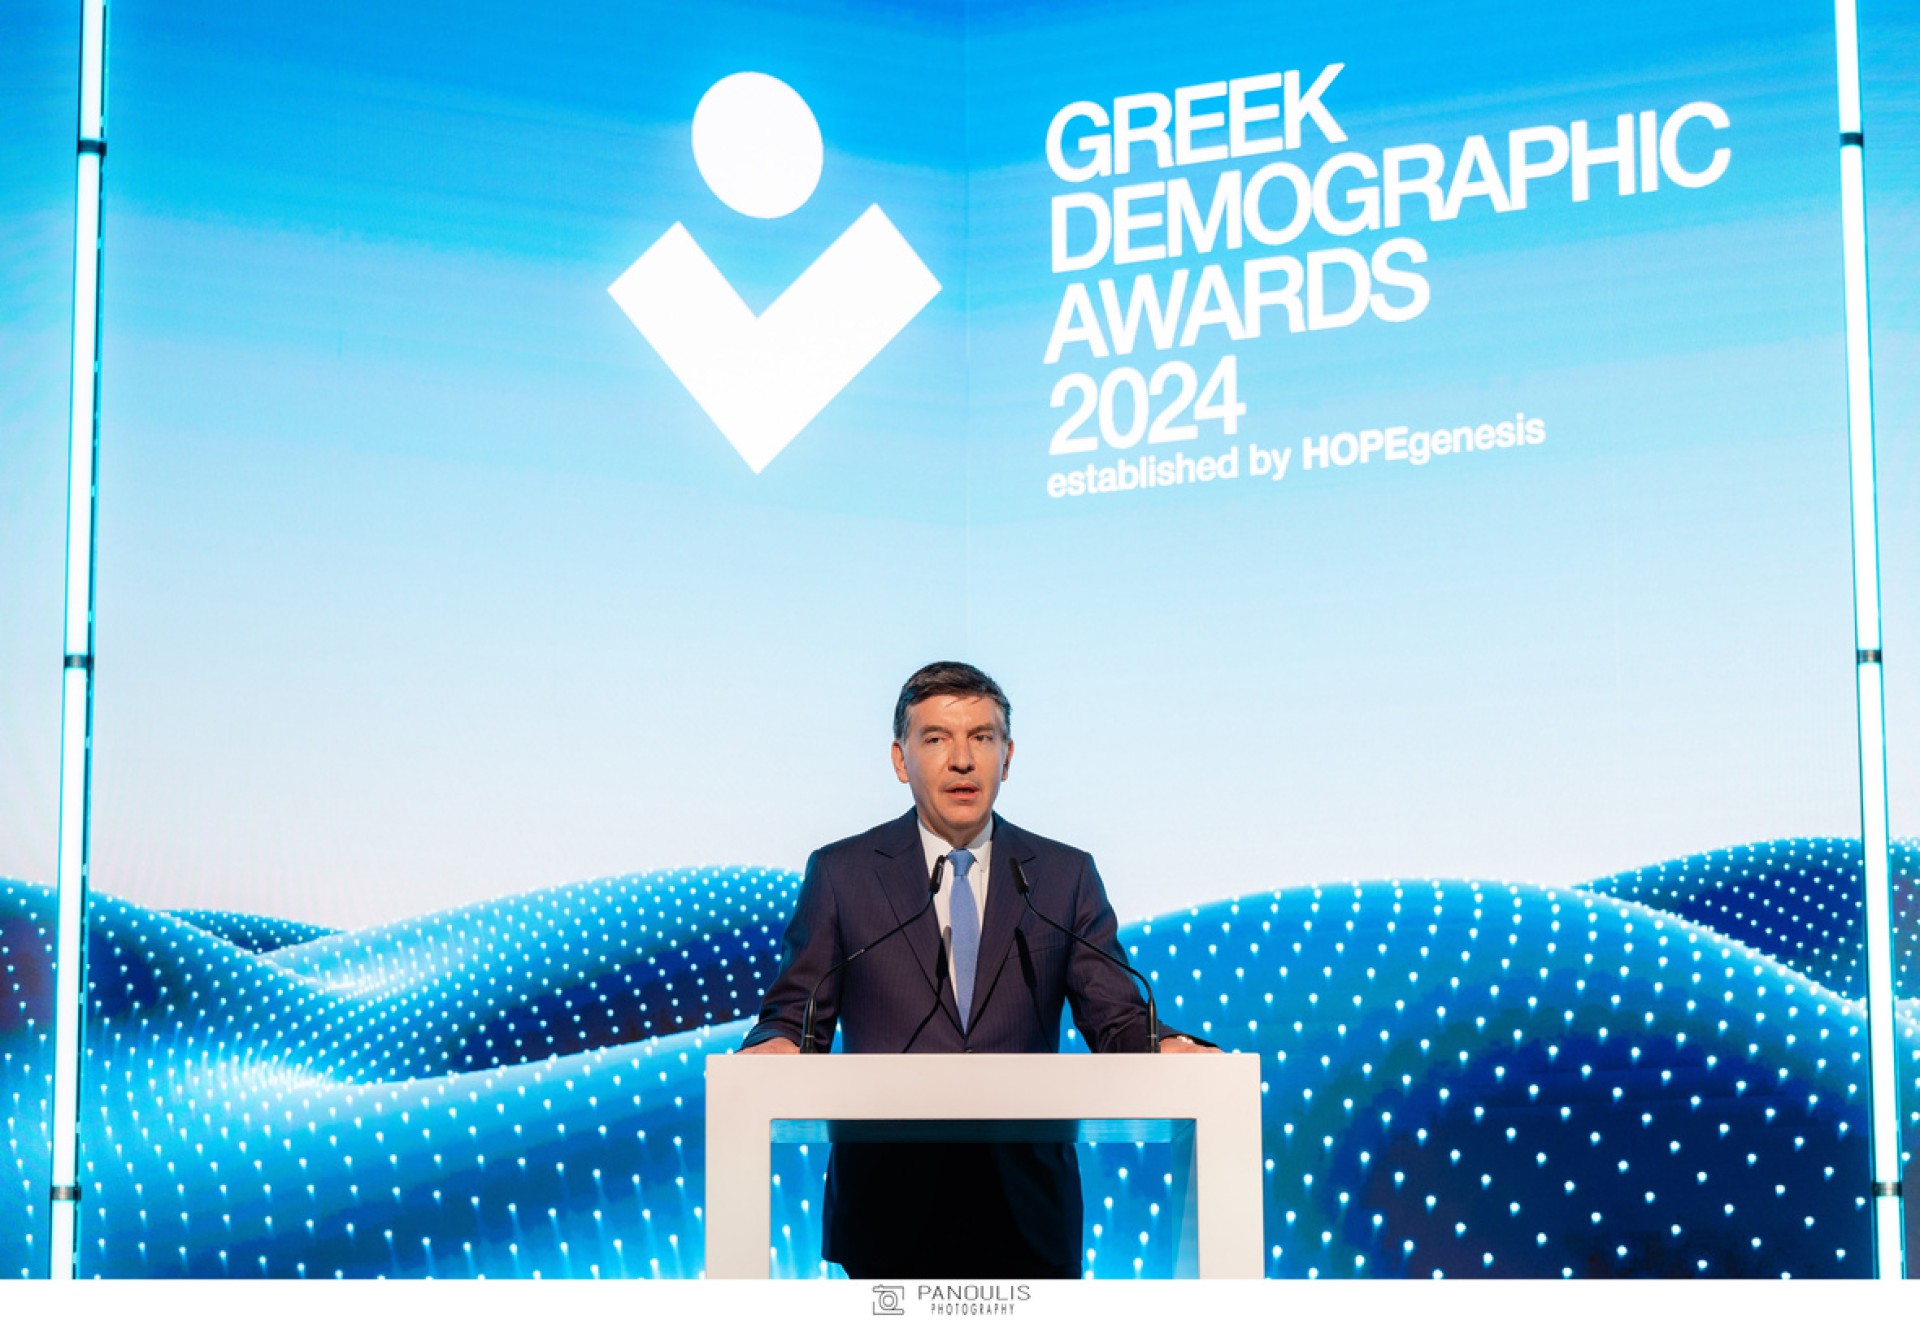 GREEK DEMOGRAPHIC AWARDS 2024 by HOPEgenesis